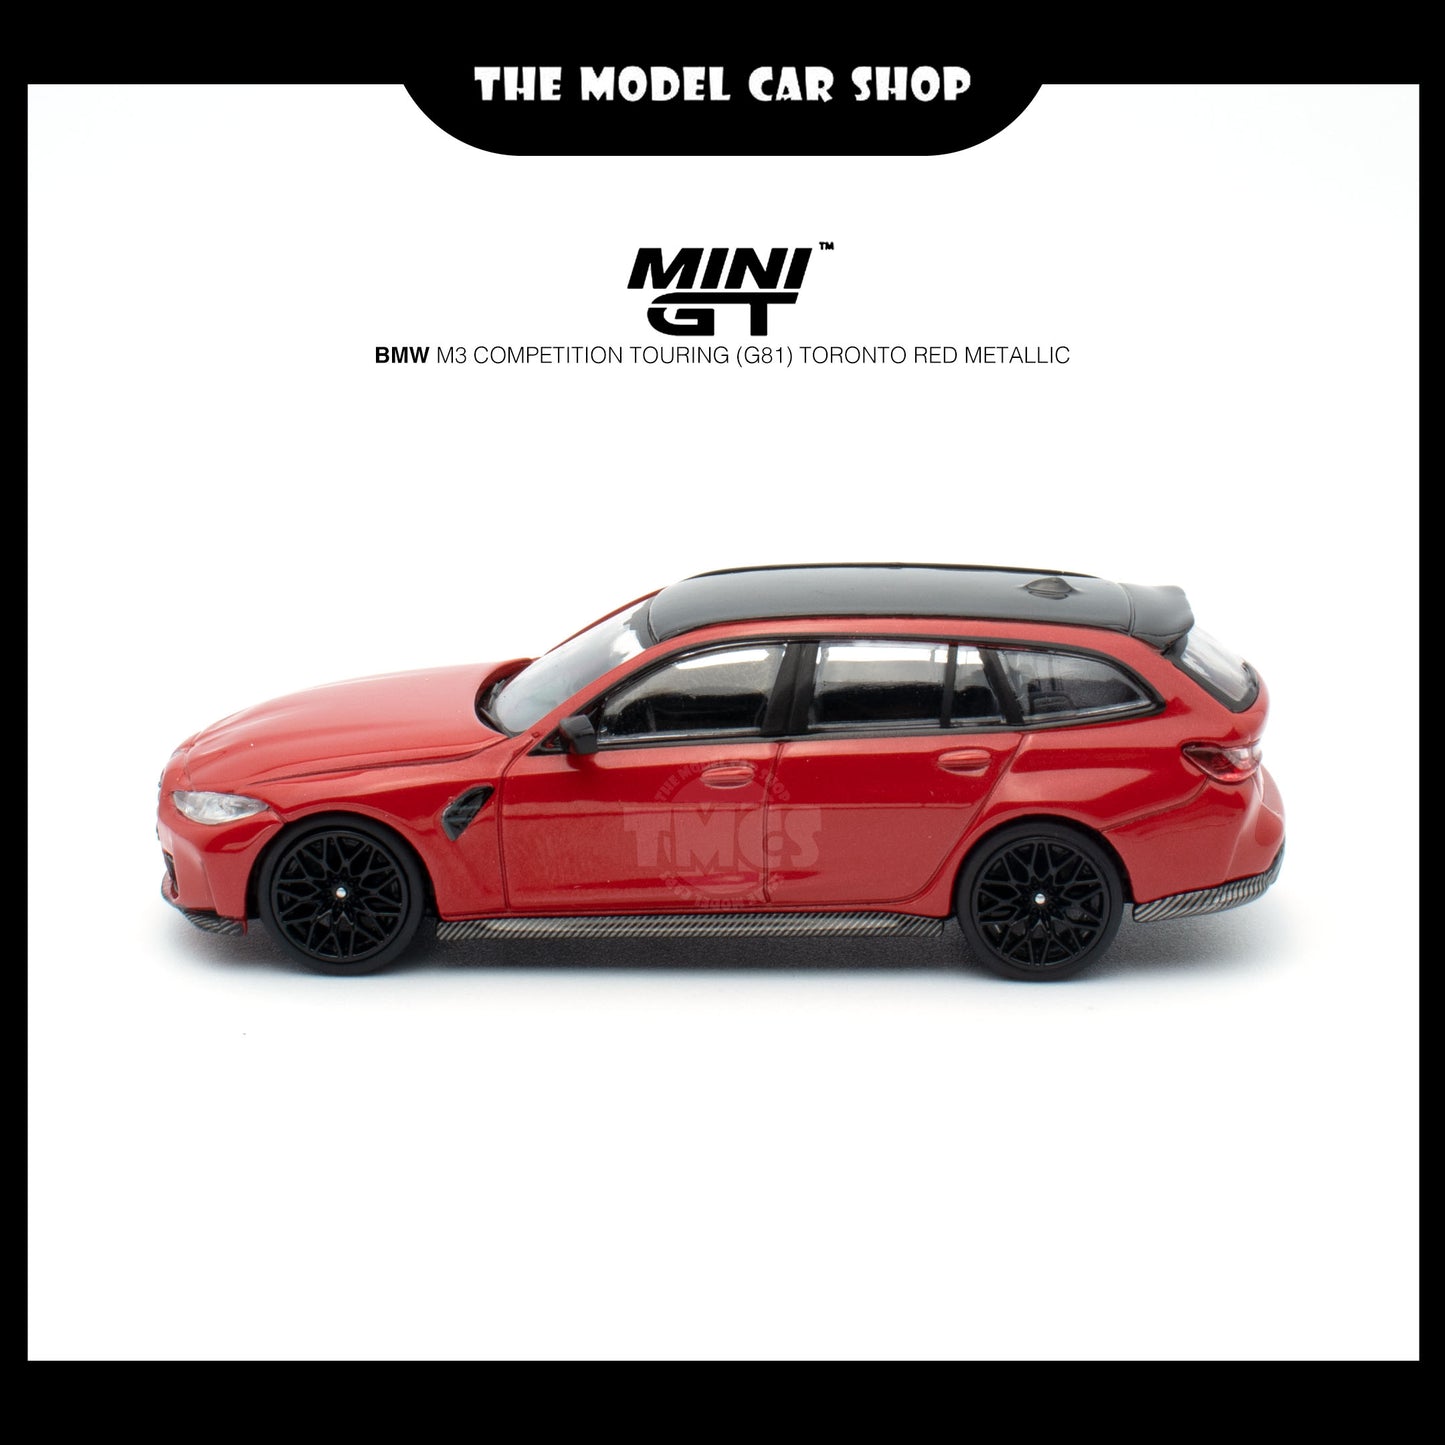 [MINI GT] BMW M3 Competition Touring (G81) Toronto Red Metallic